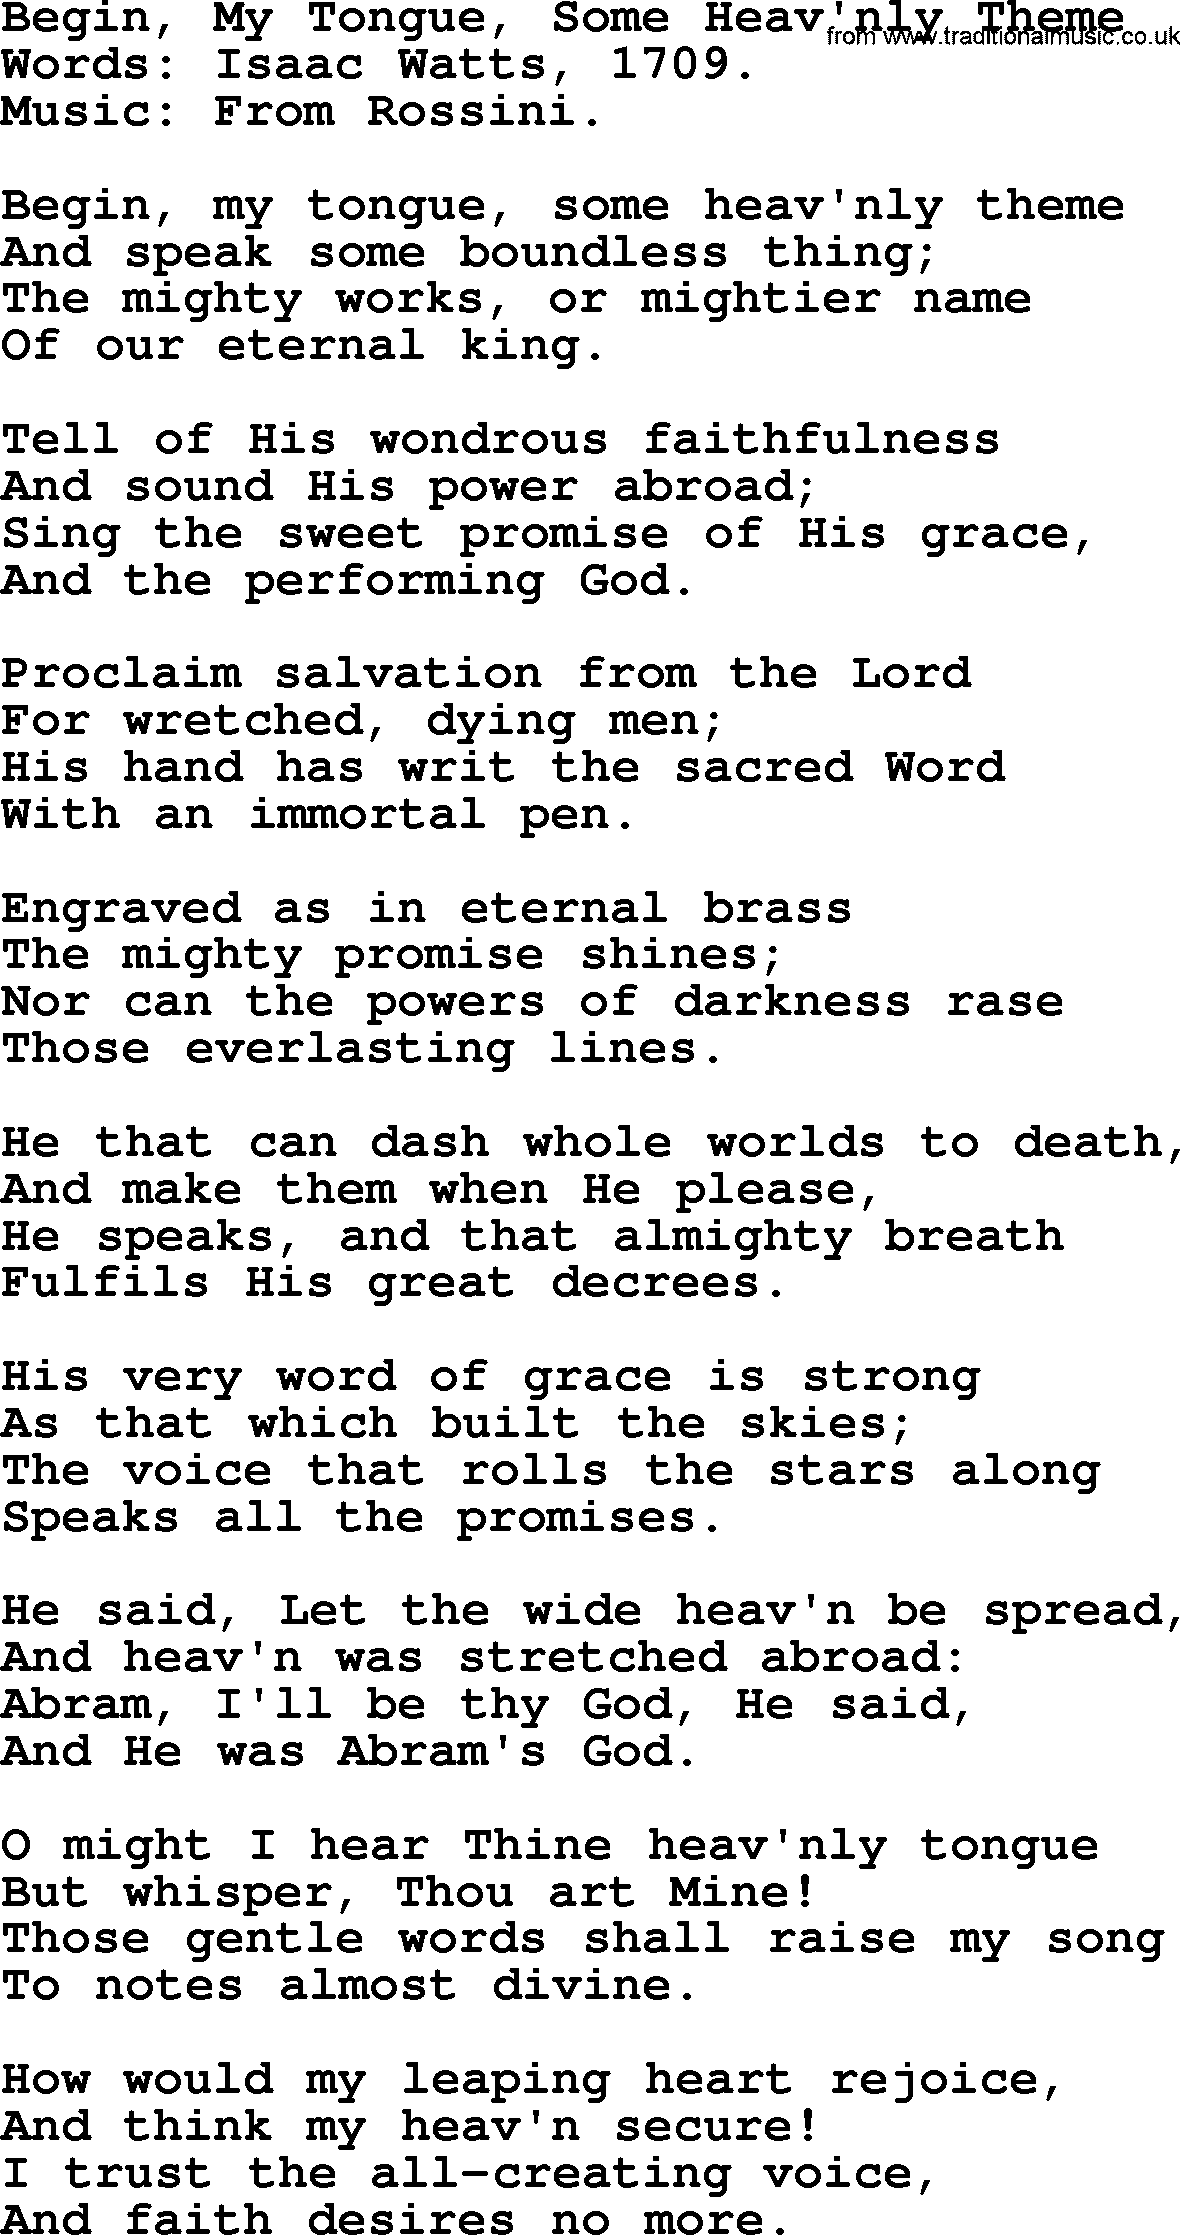 Isaac Watts Christian hymn: Begin, My Tongue, Some Heav'nly Theme- lyricss